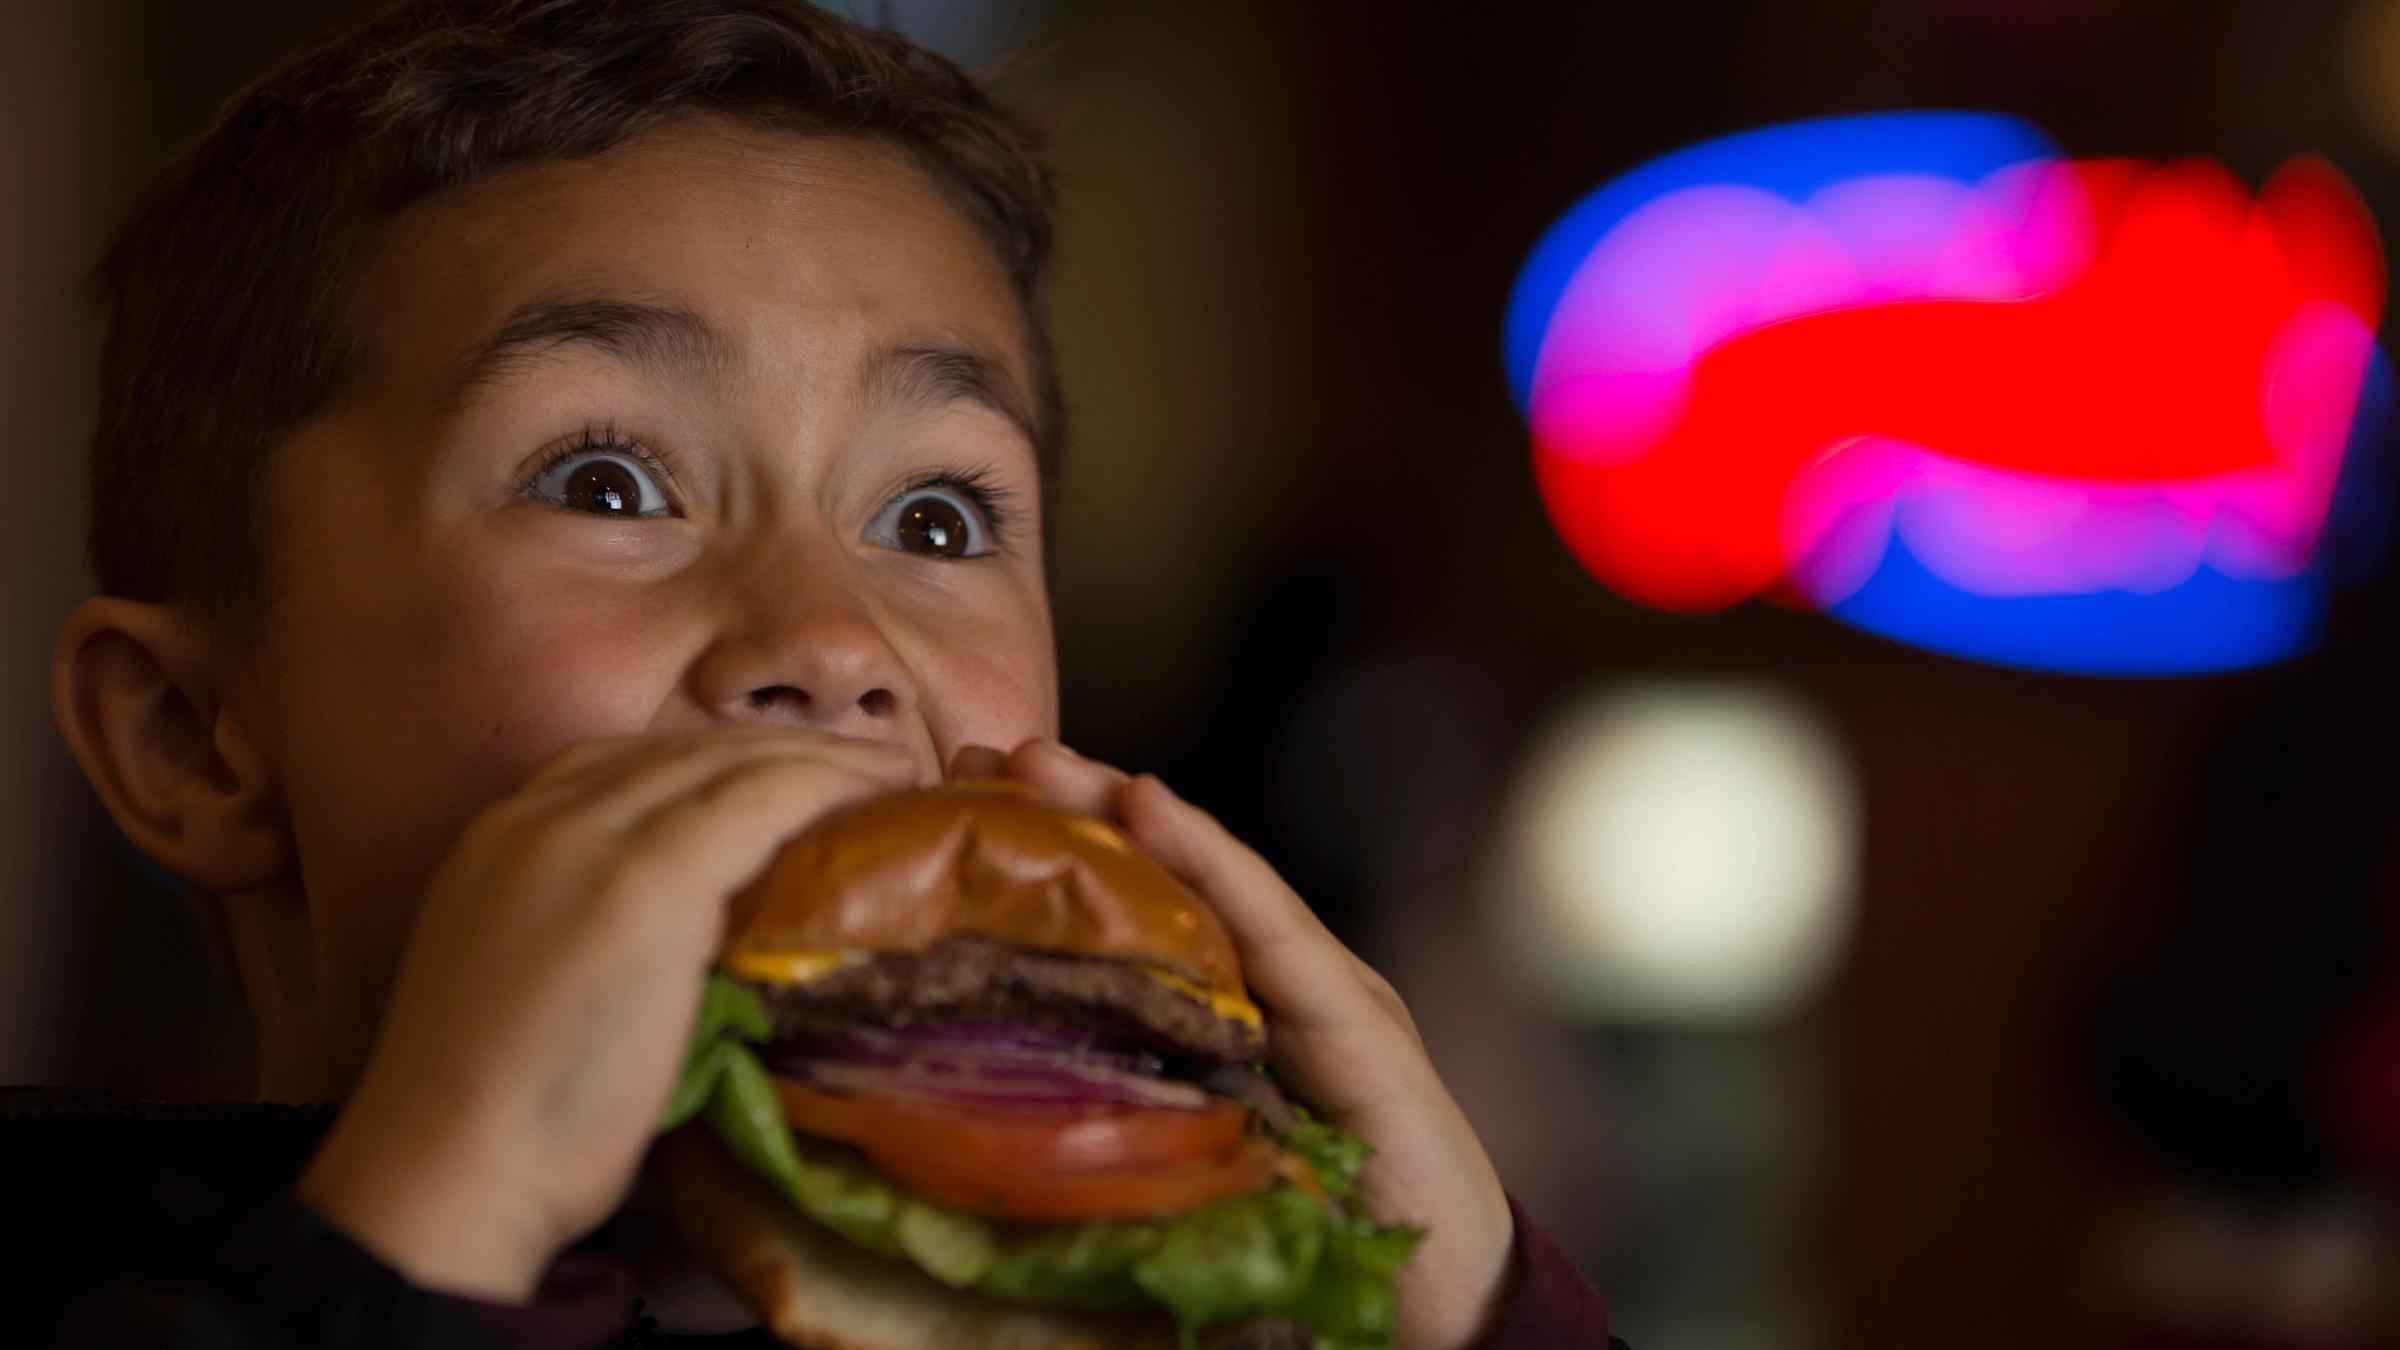 Child eating a cheeseburger